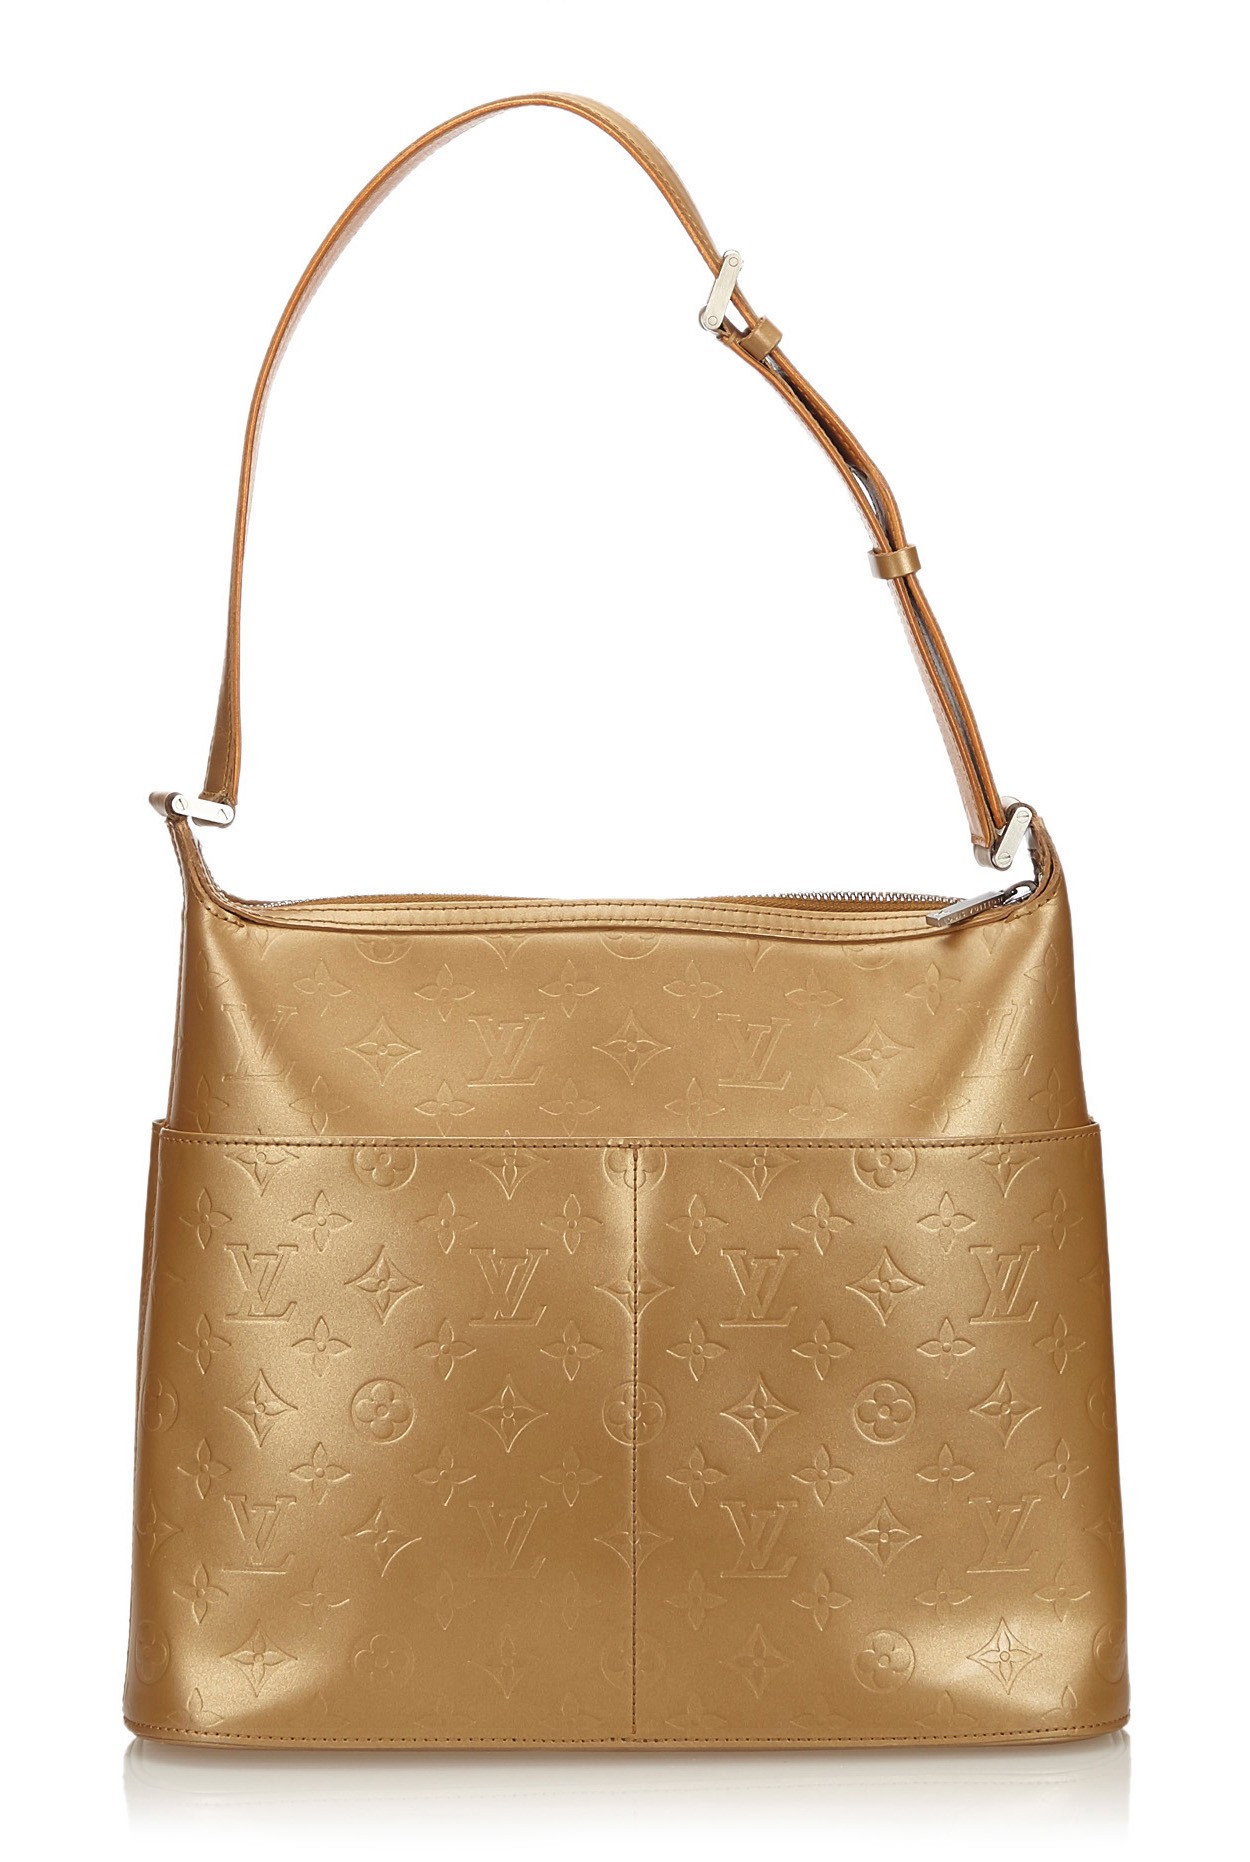 Louis Vuitton Monogram Gold Bowtie